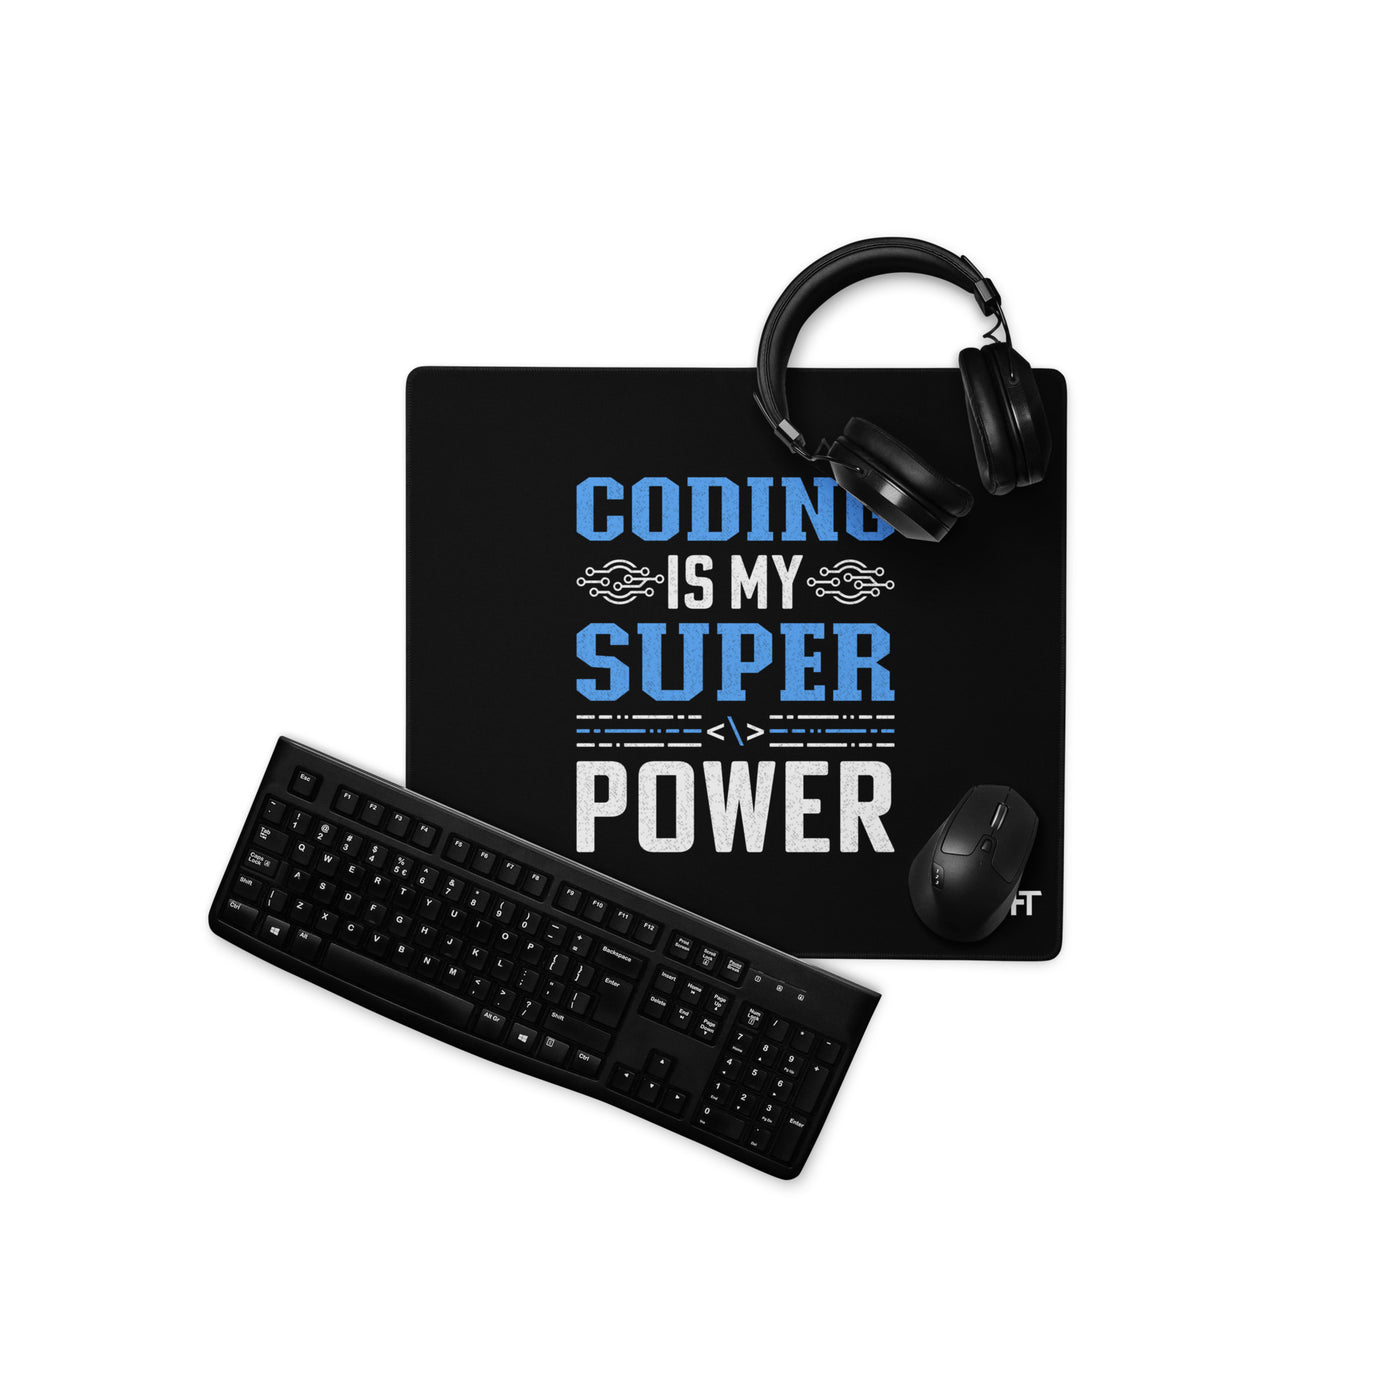 Coding is My Super Power Desk Mat